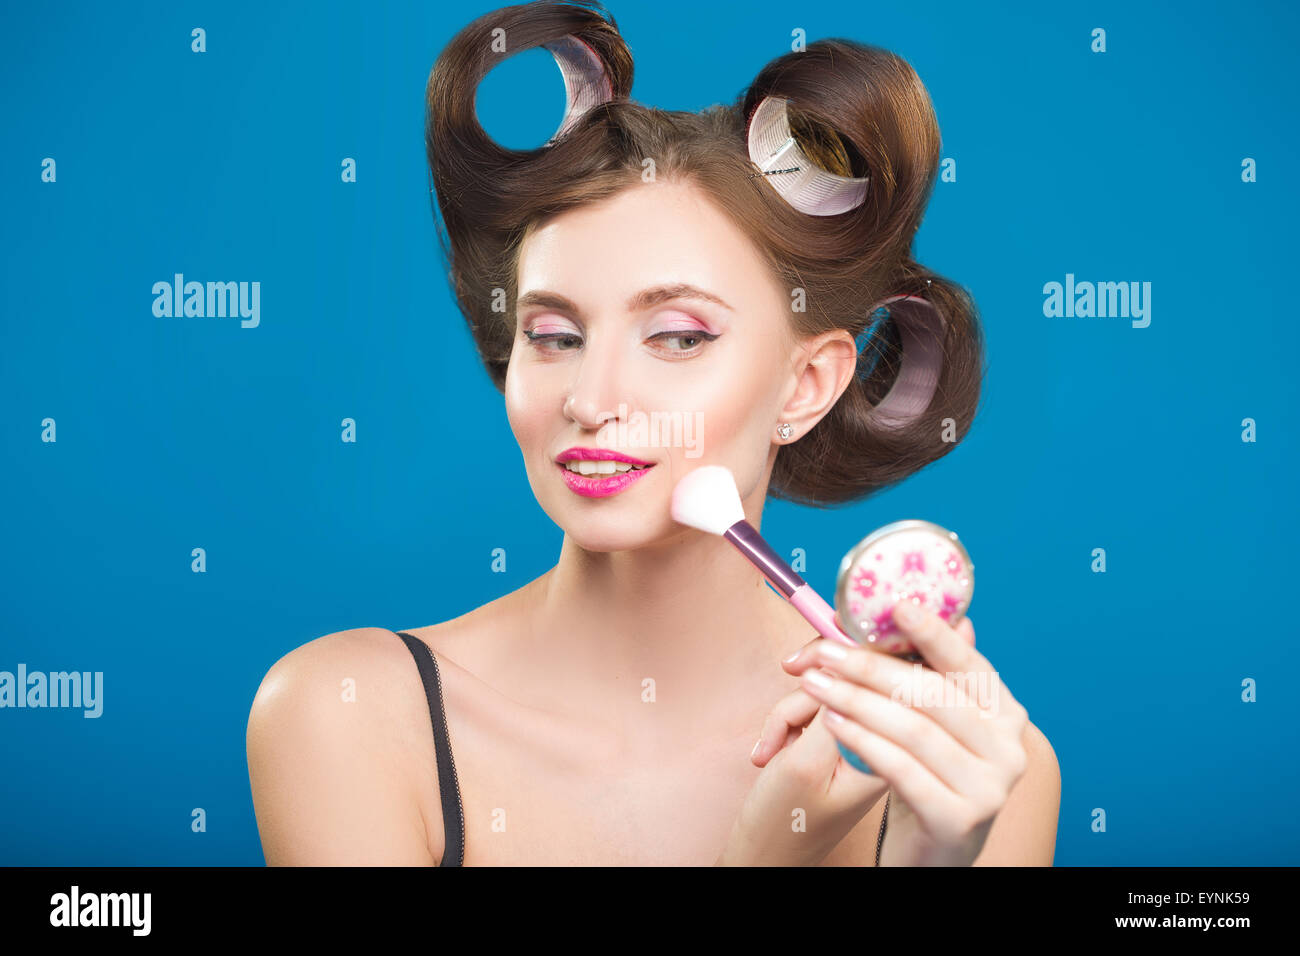 Cute pin up girl applying blusher Stock Photo: 85913221 - Alamy